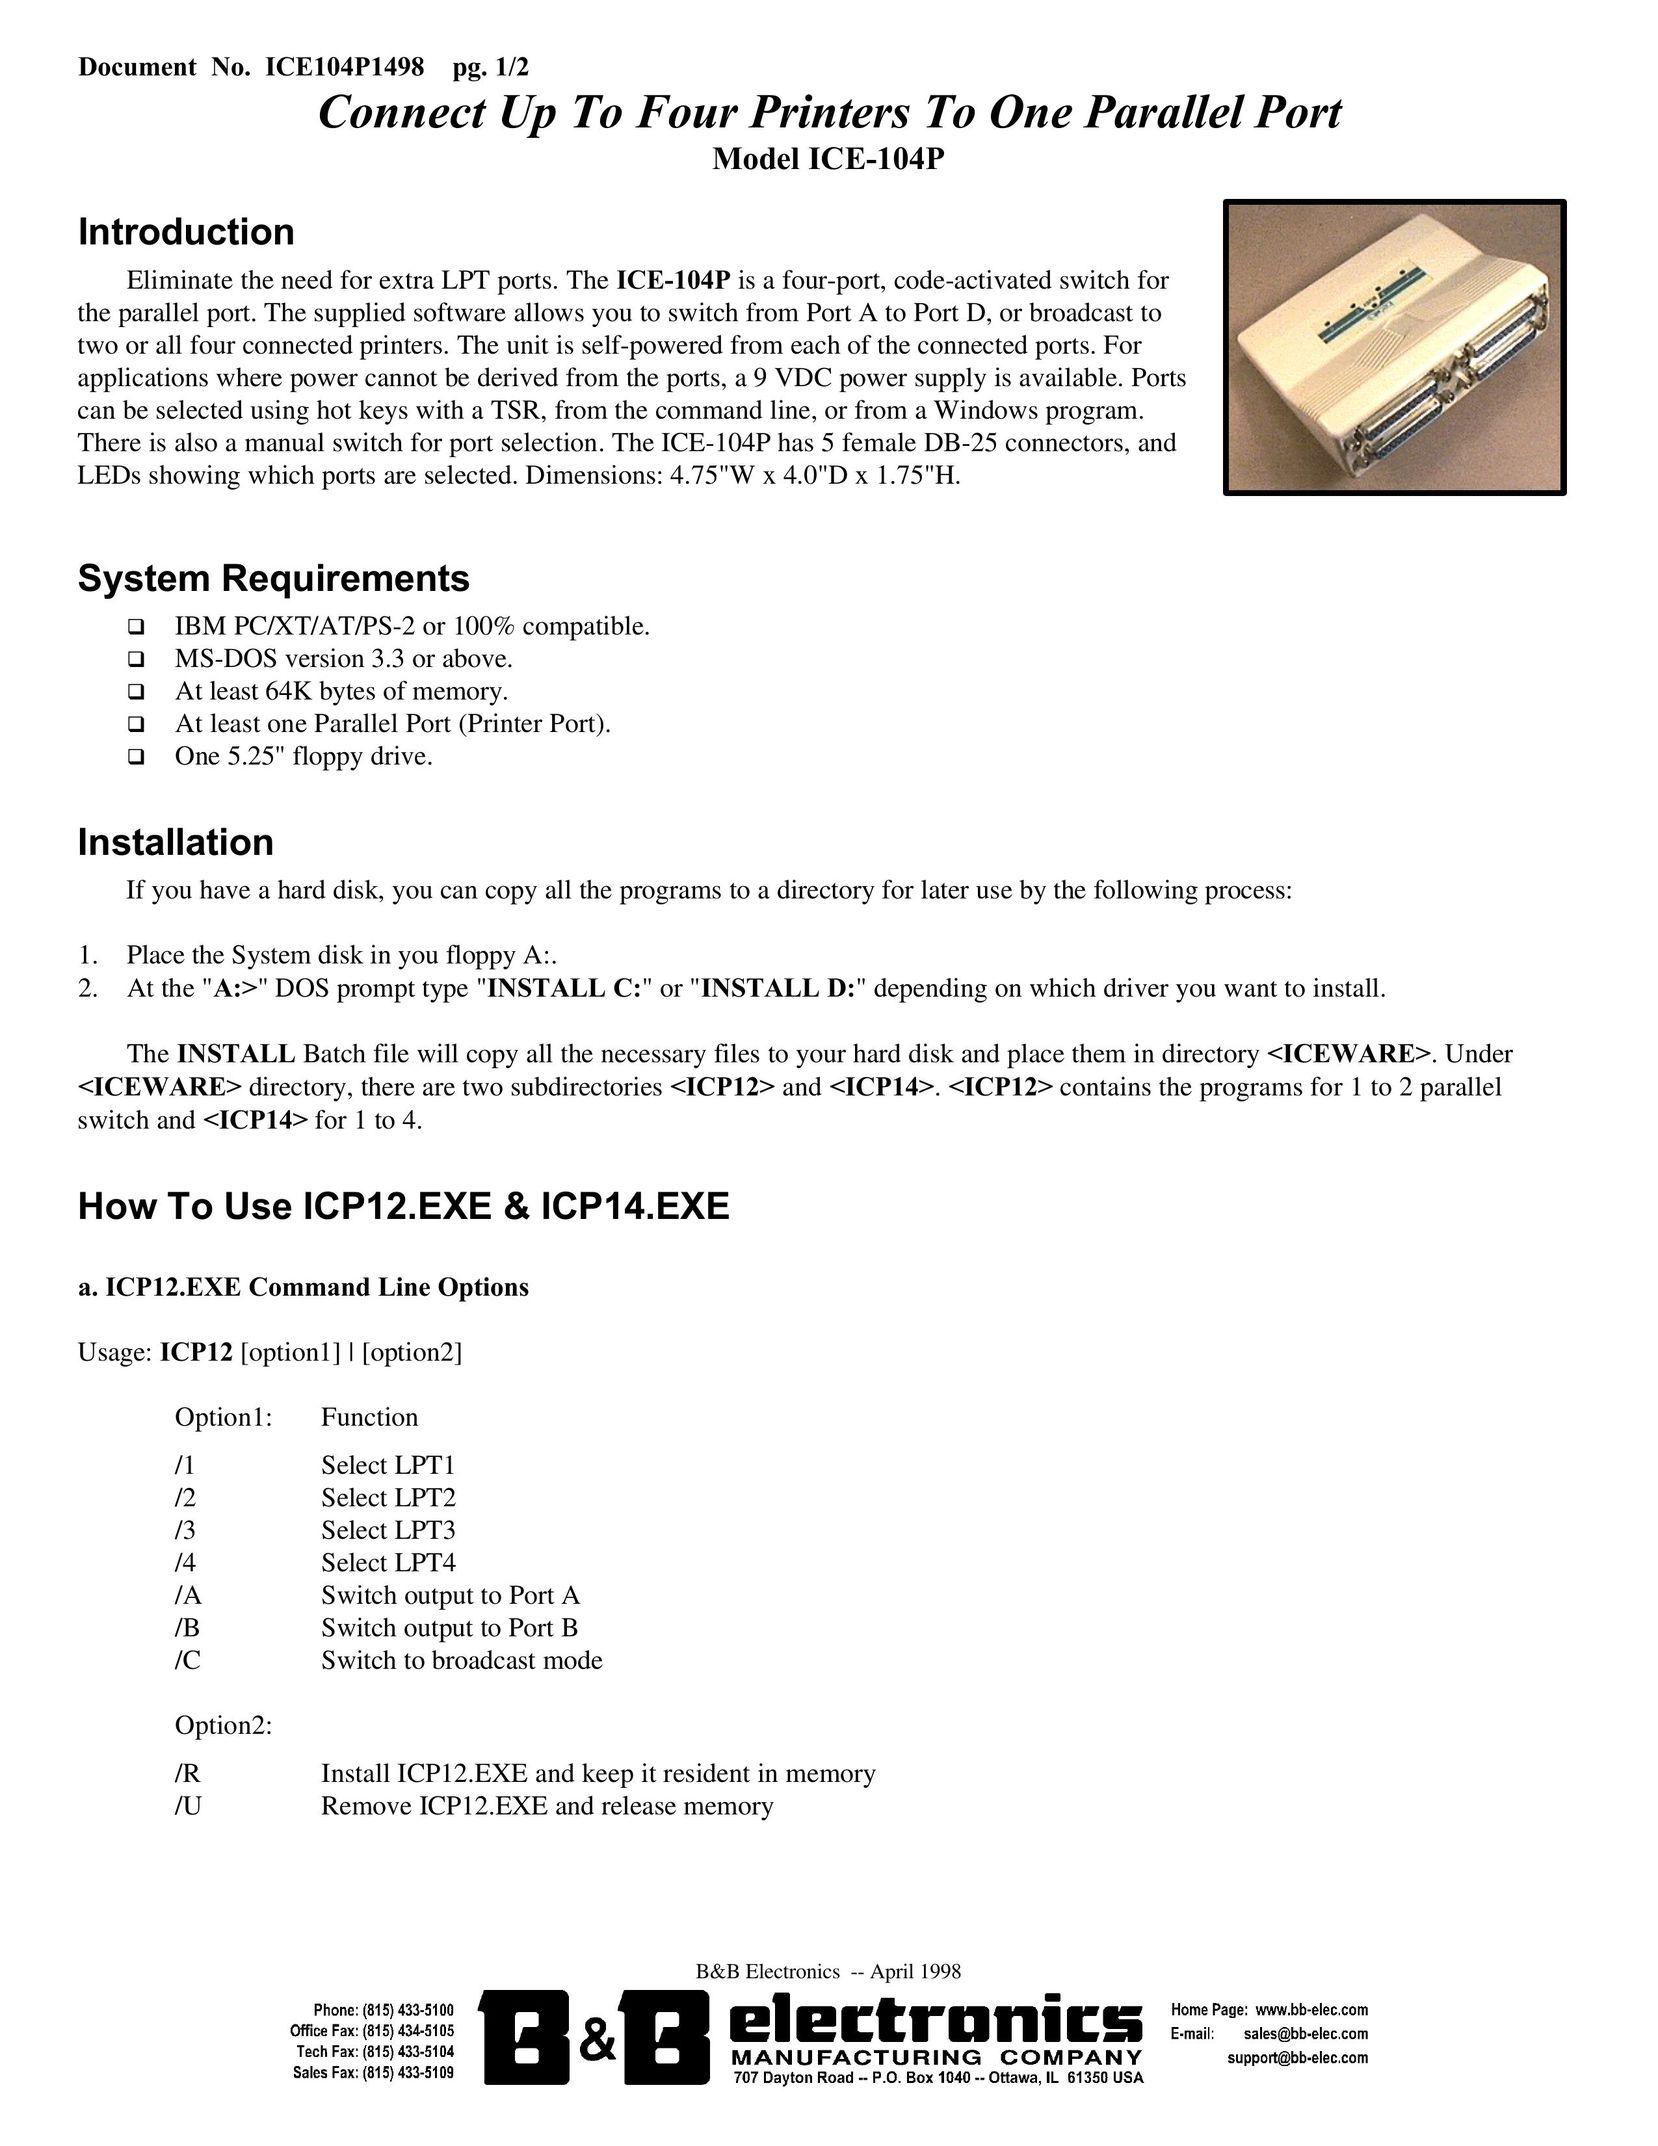 B&B Electronics ICE-104P Switch User Manual